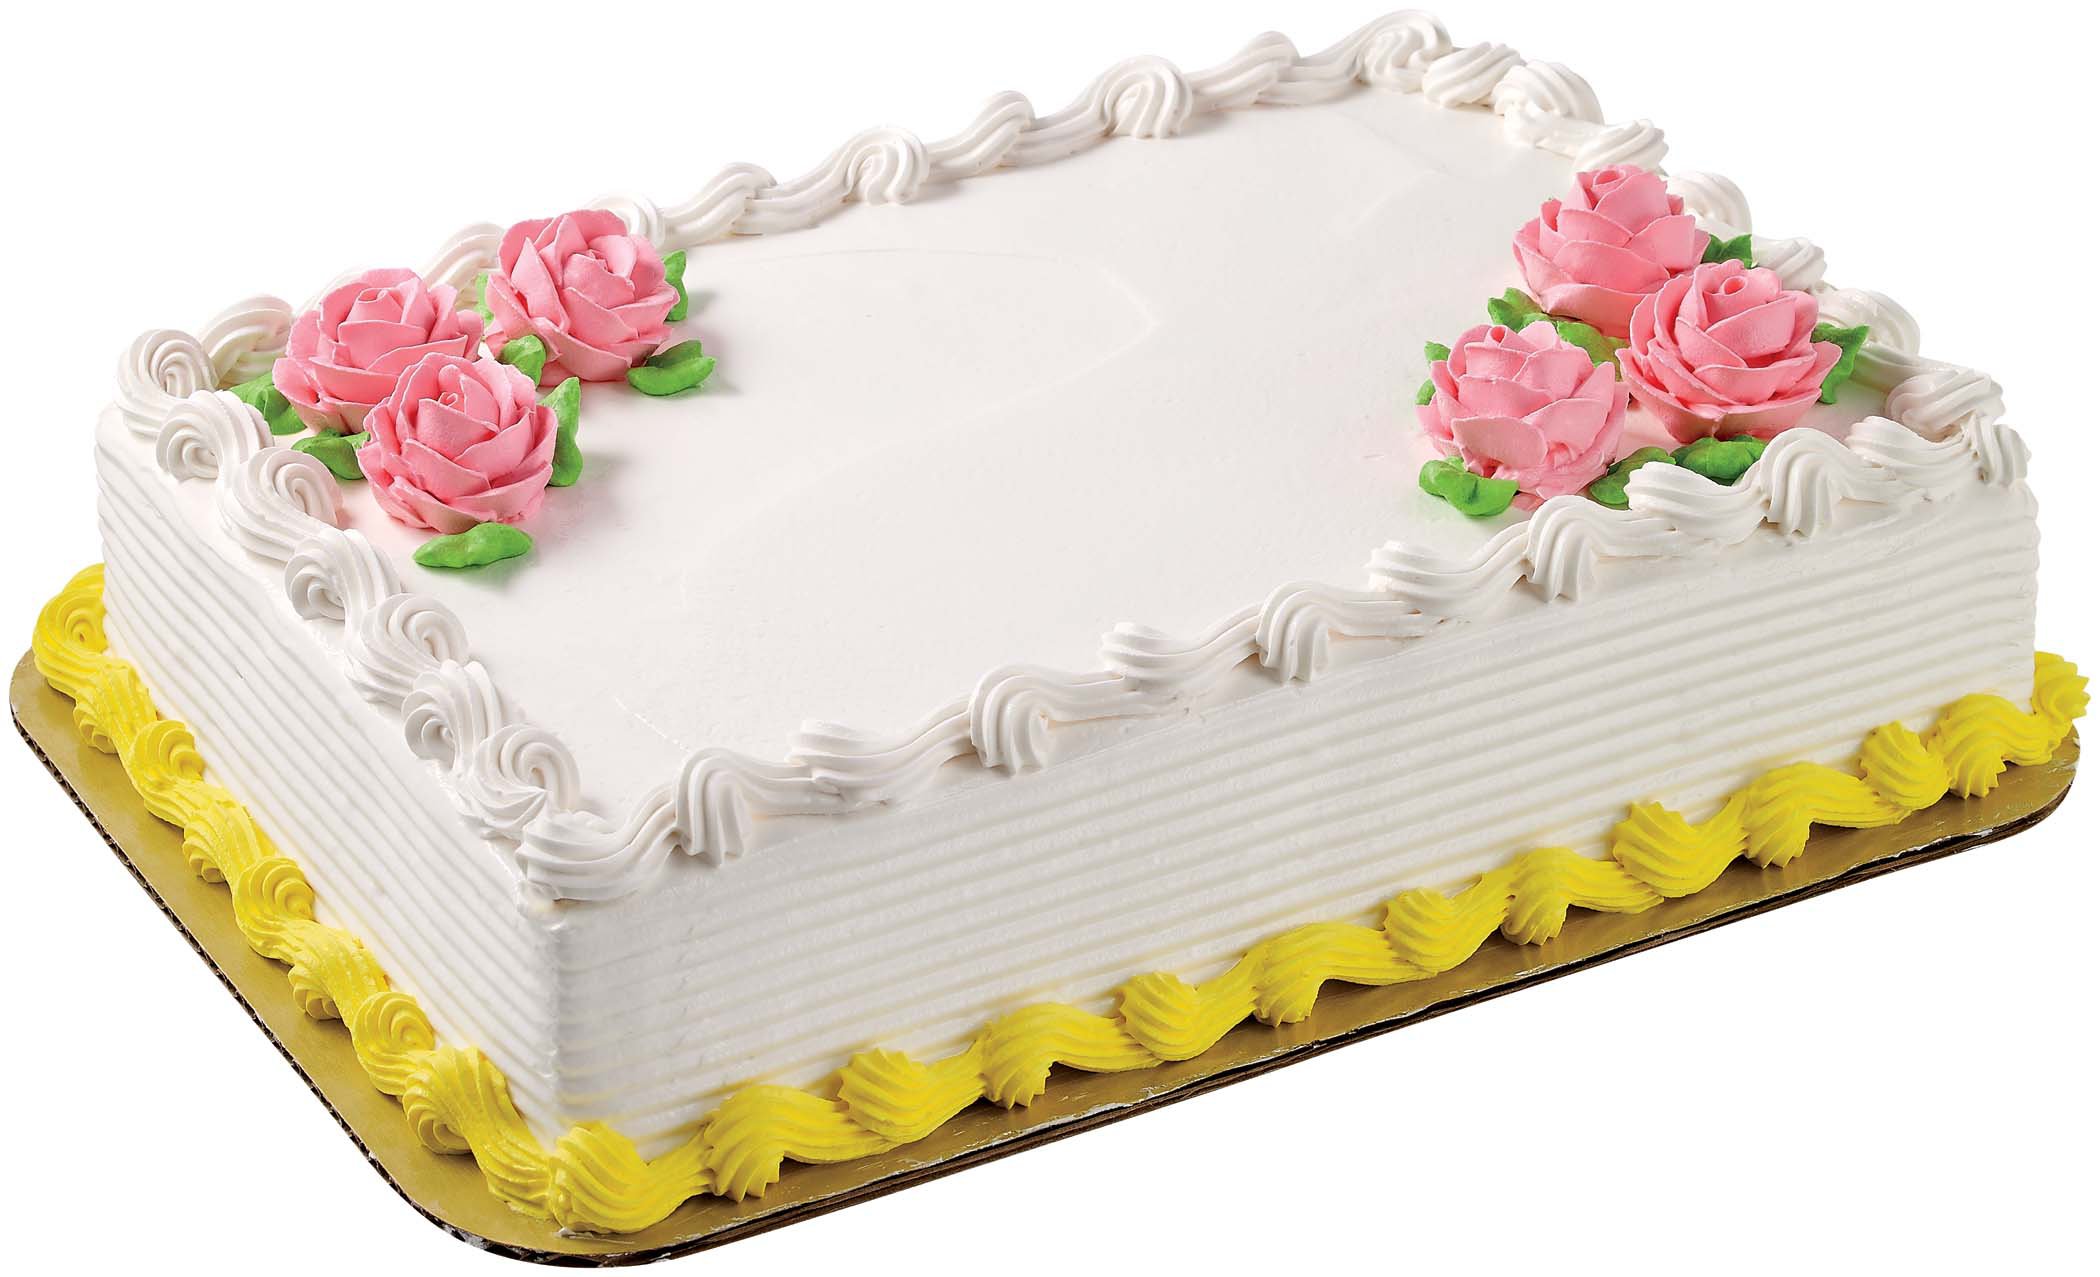 HEB White Cake with Vanilla Ice Cream Shop Cakes at HEB